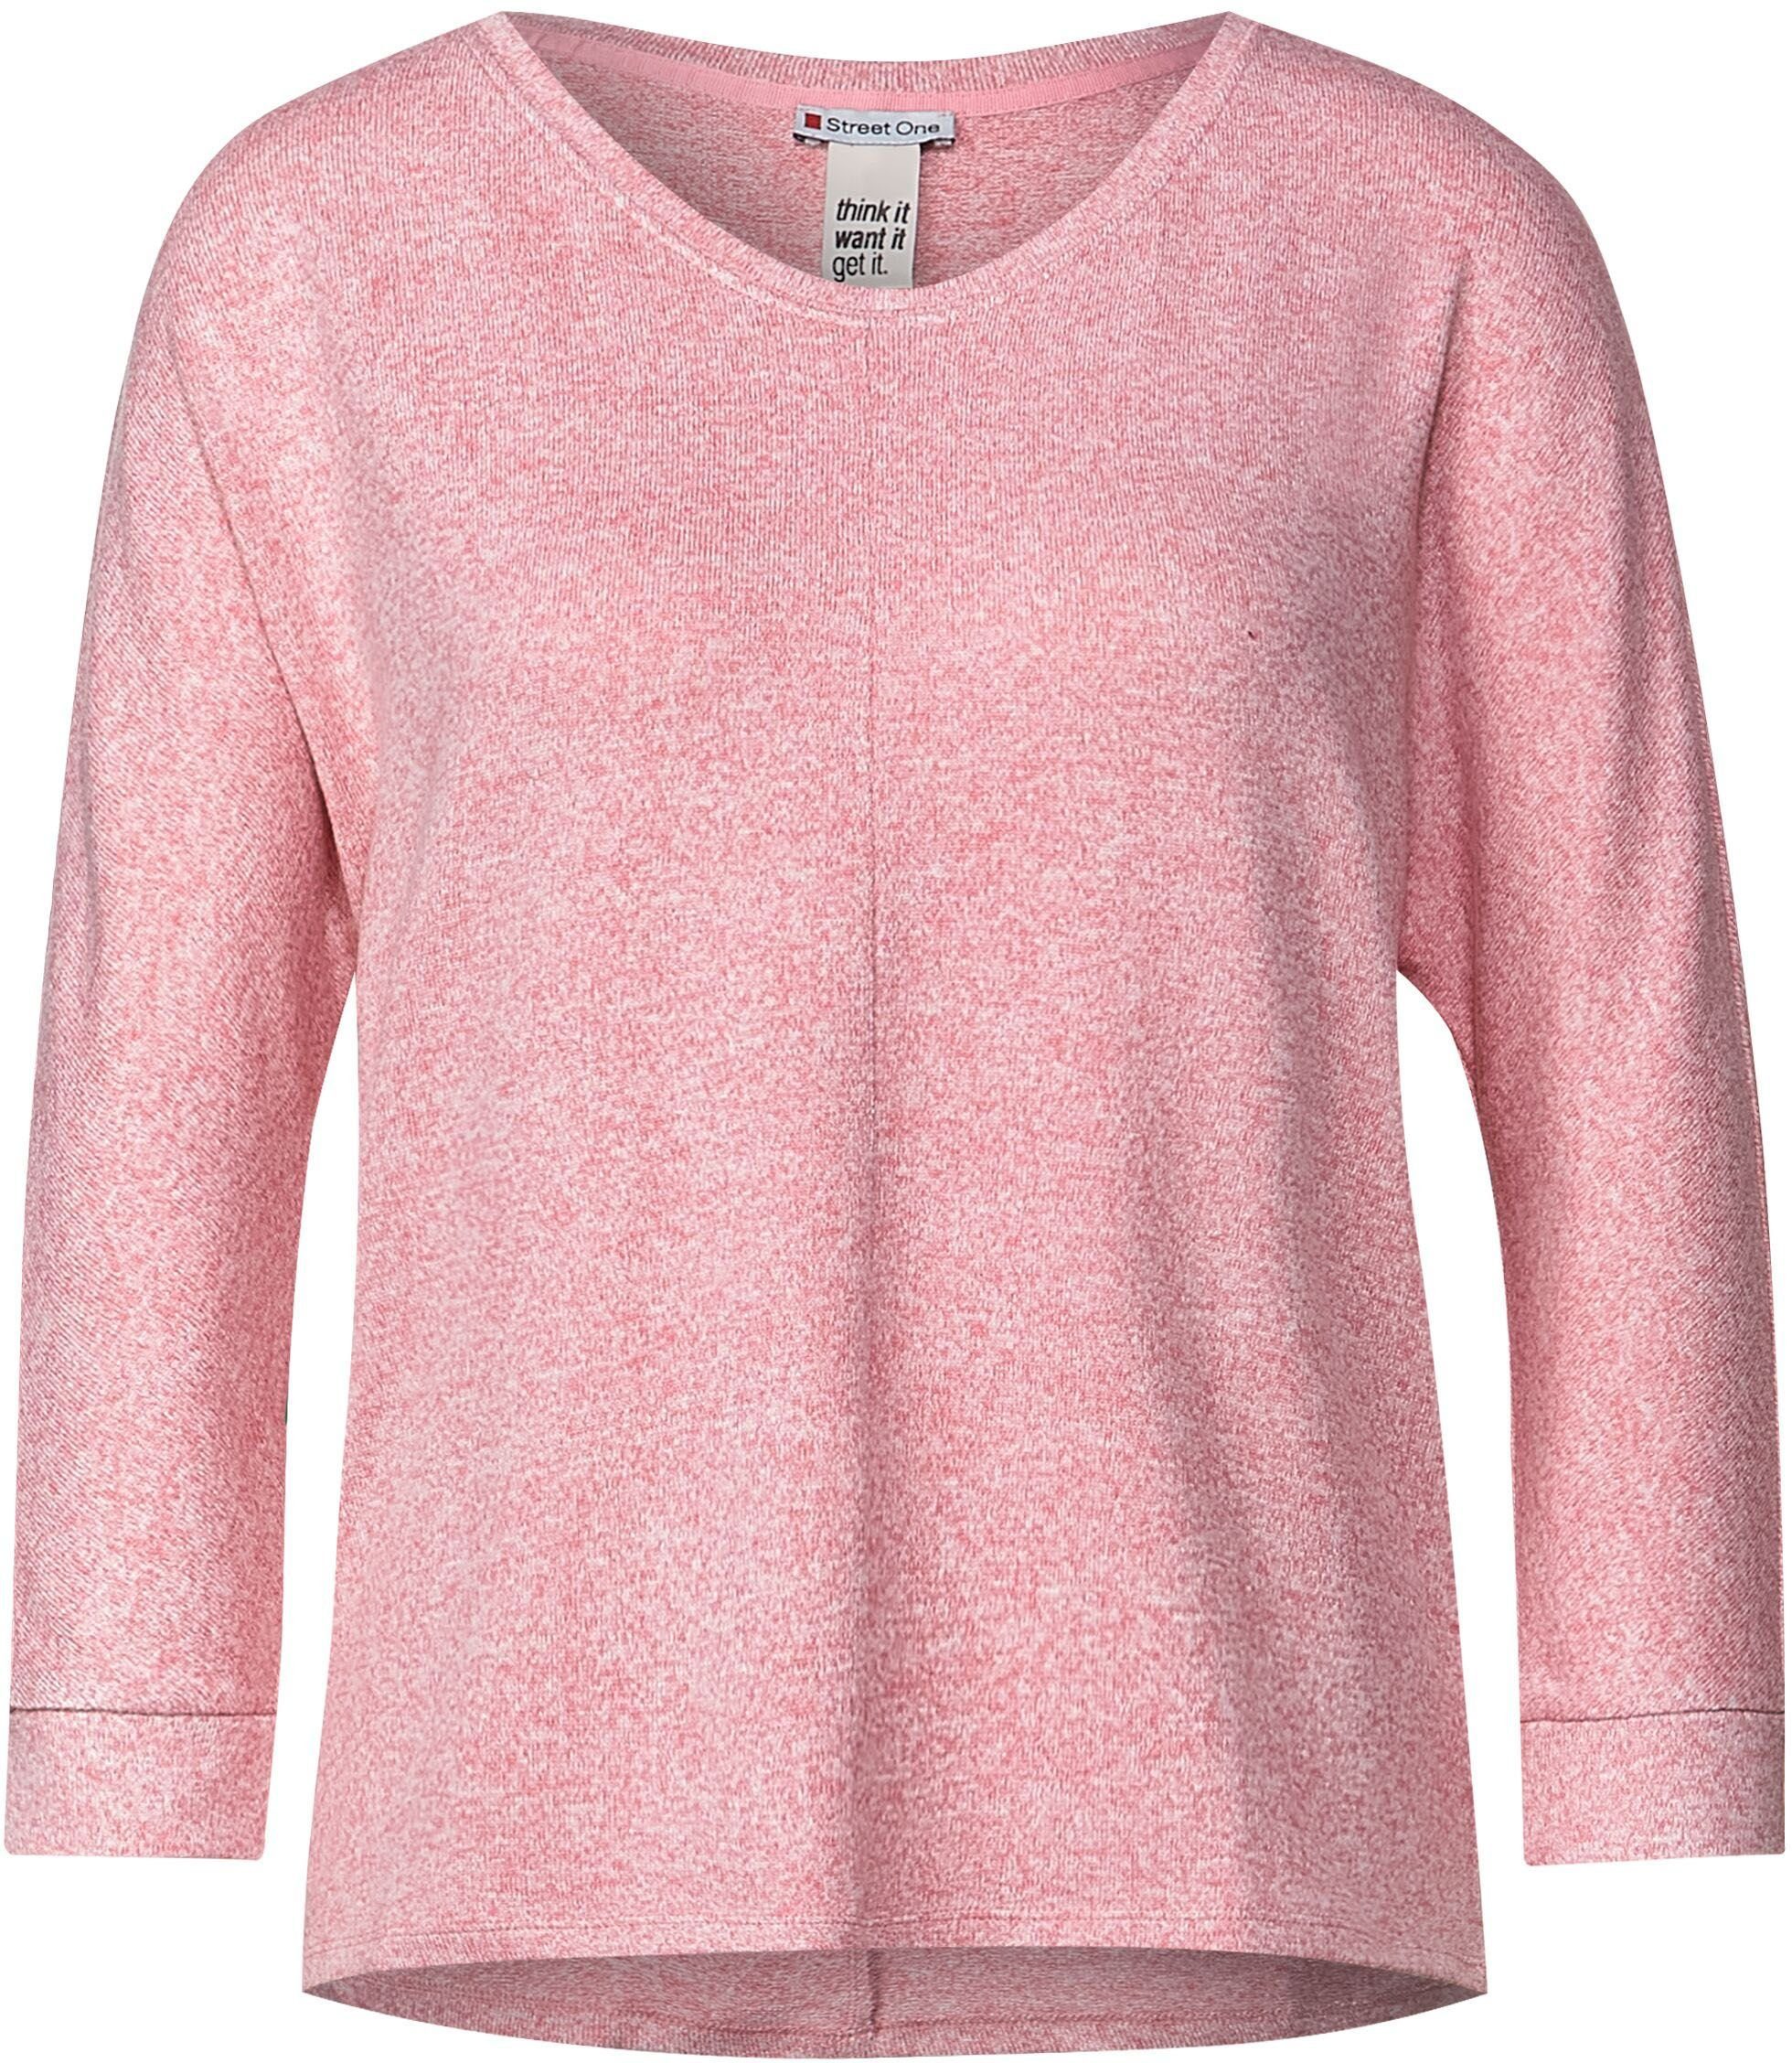 ONE Ellen Style in Melange-Optik rose melange winter 3/4-Arm-Shirt STREET